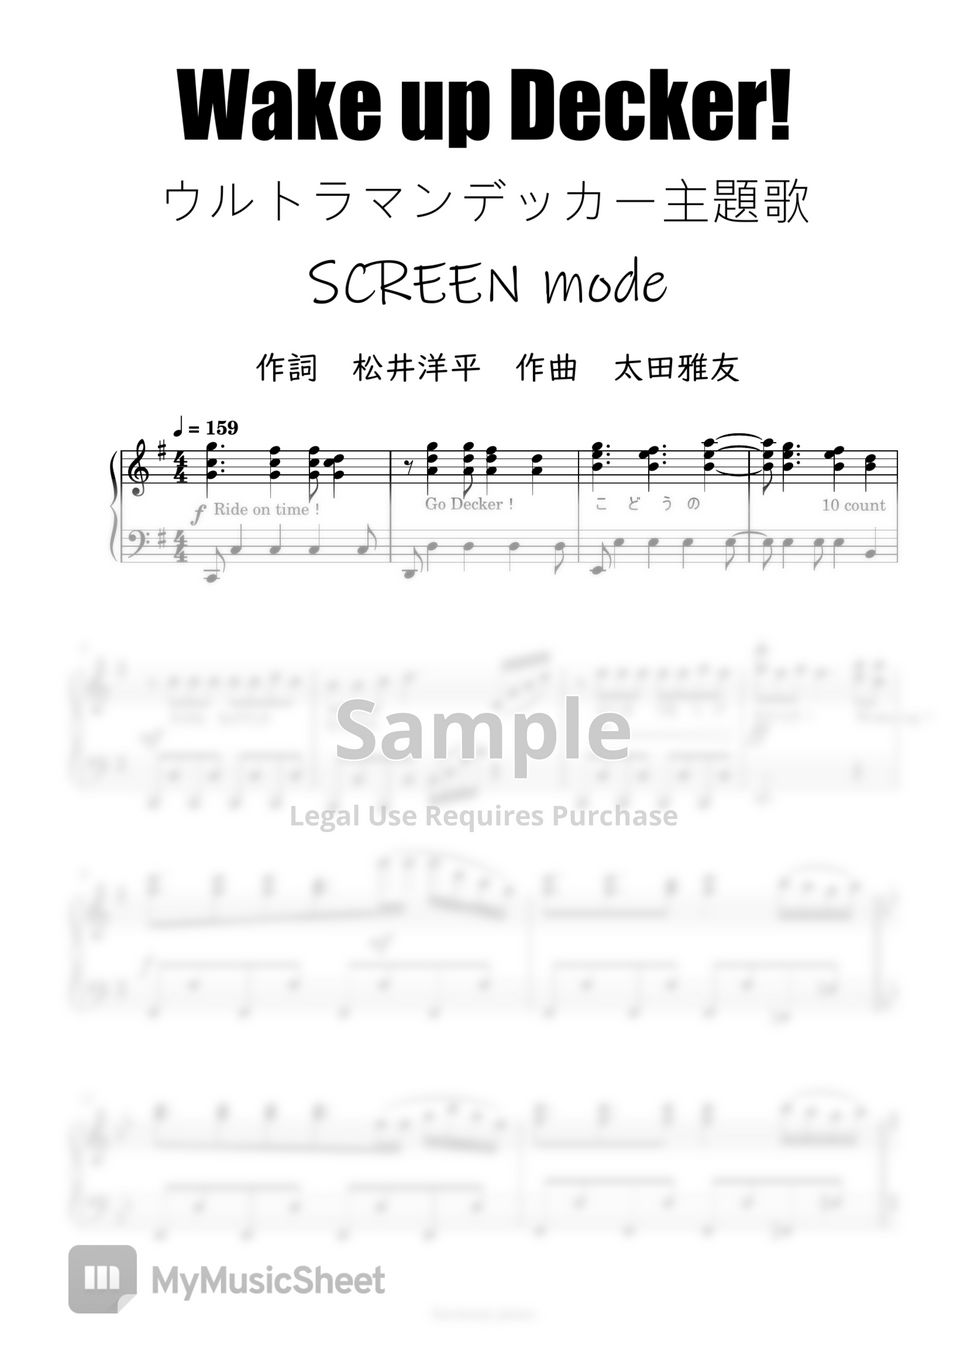 SCREEN mode - Wake up Decker! (Ultraman Decker) by harmony piano